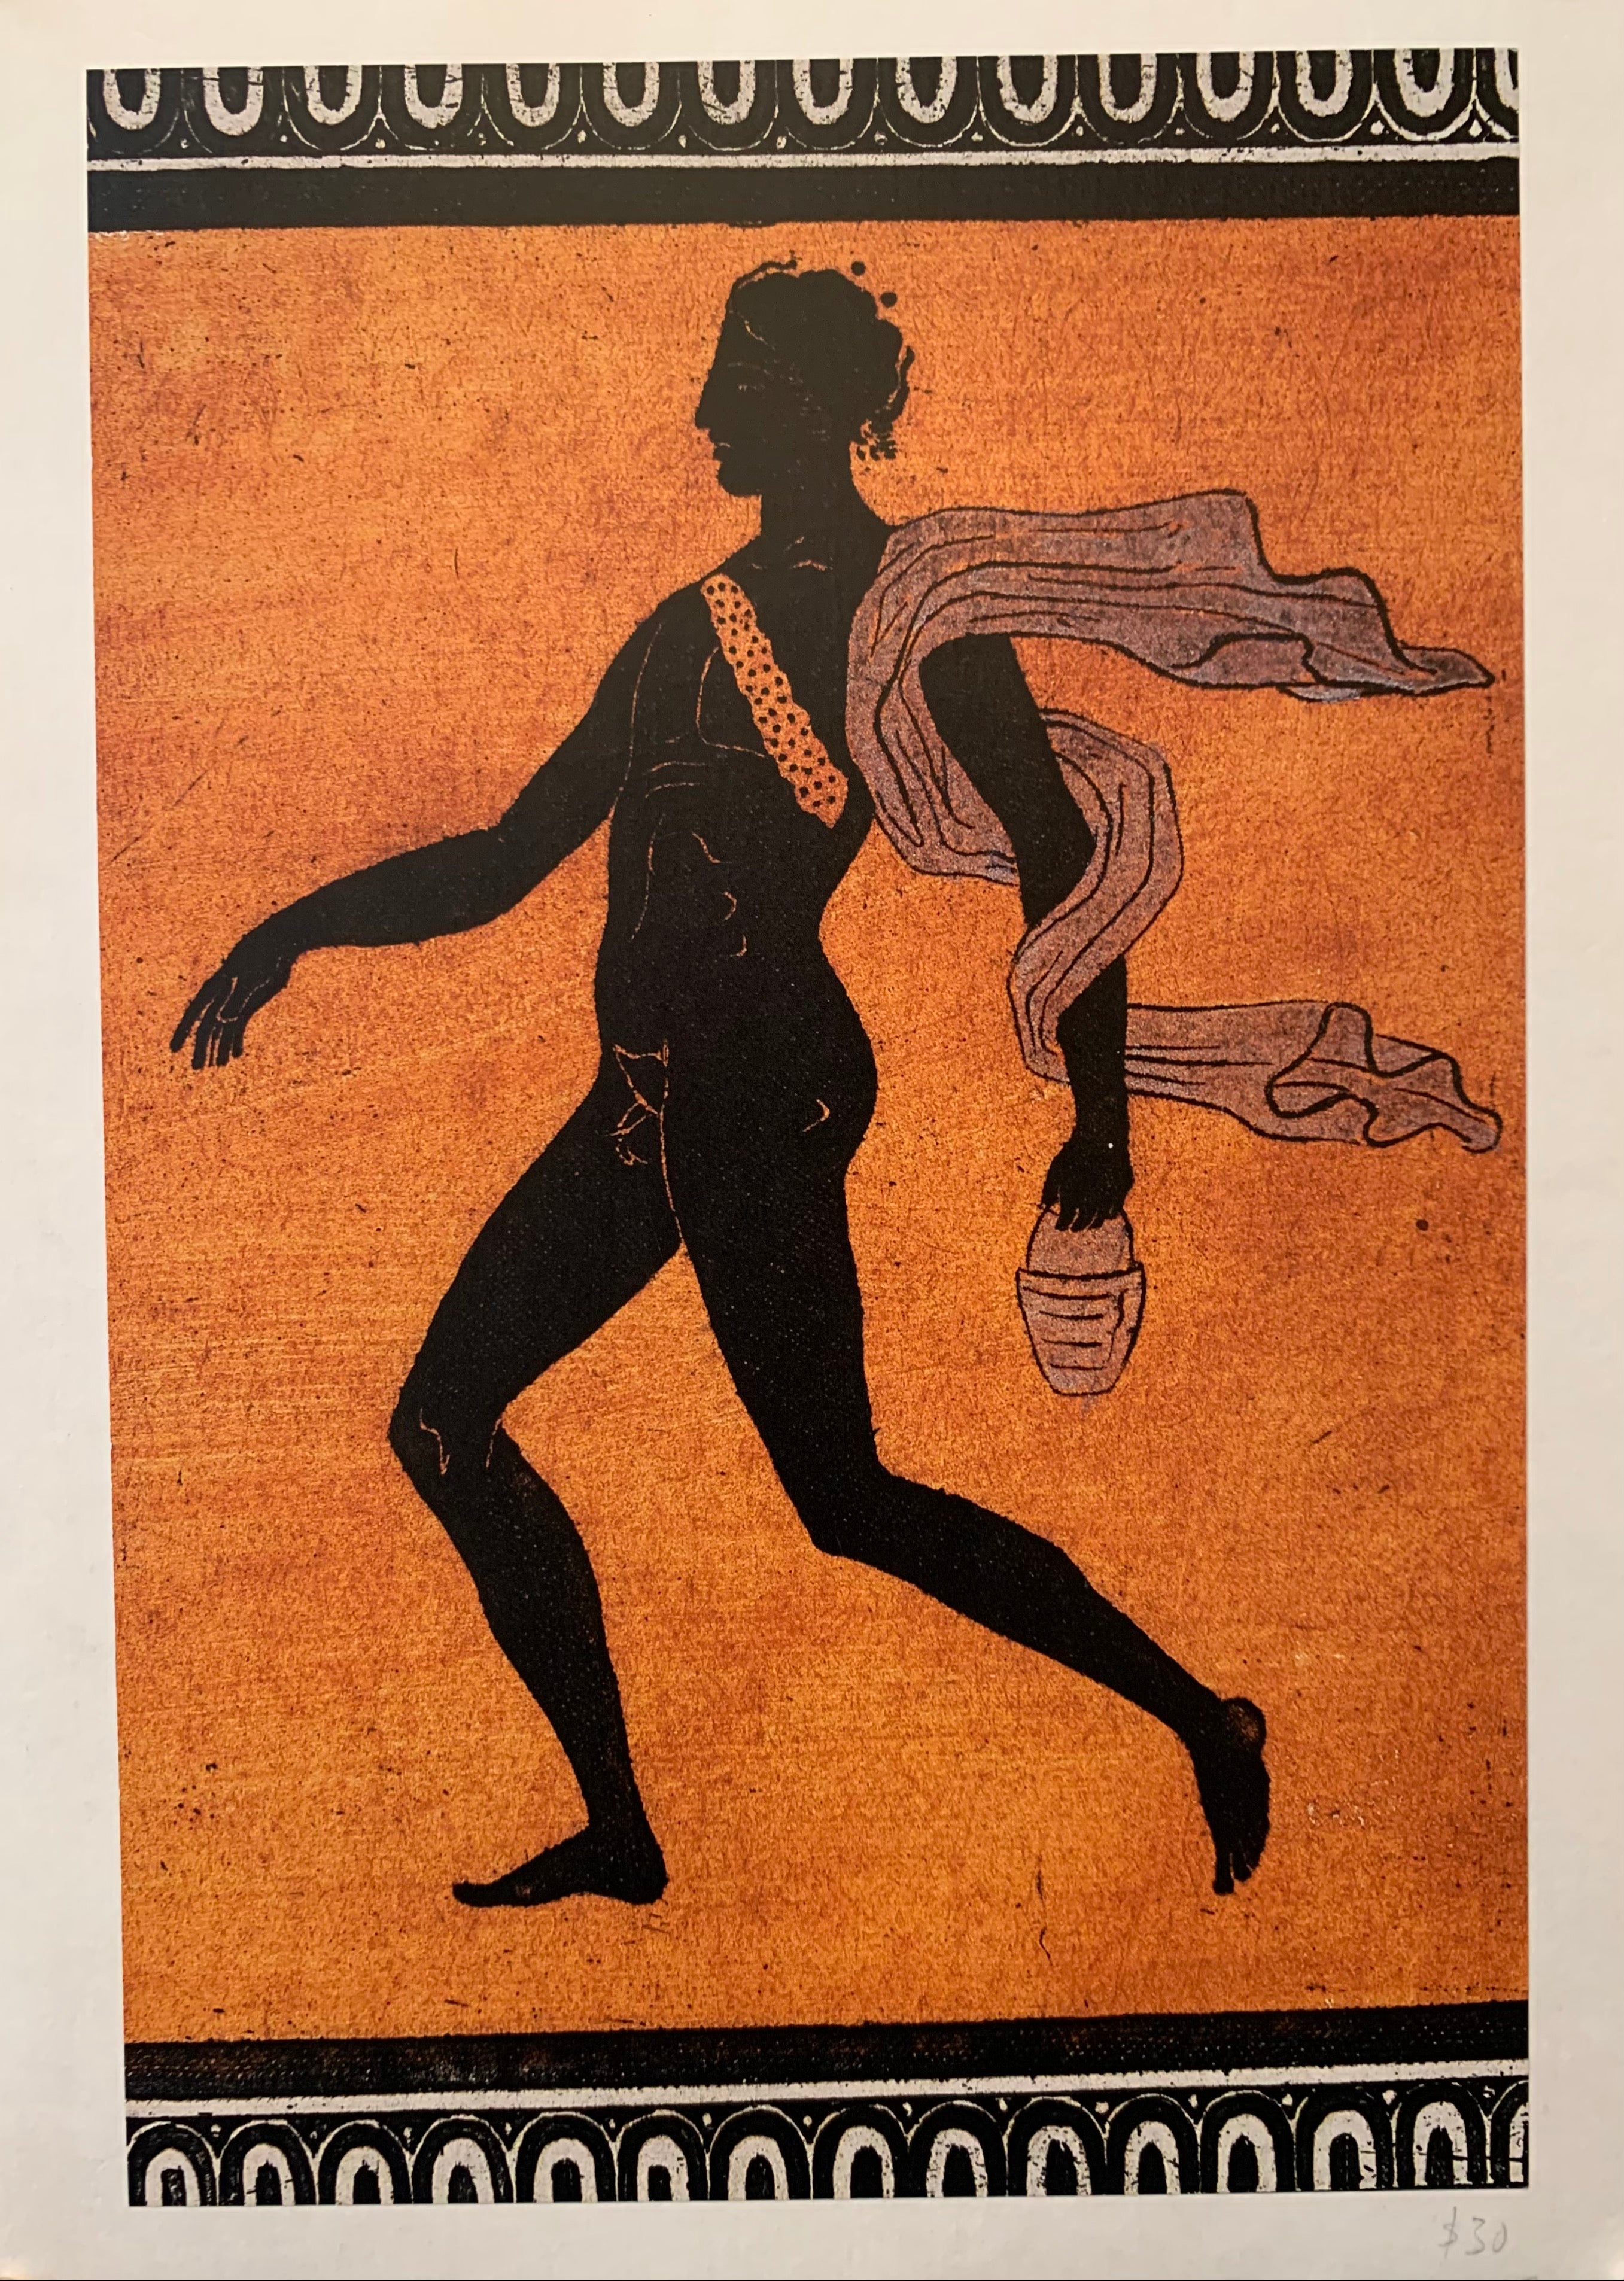 ancient greek running